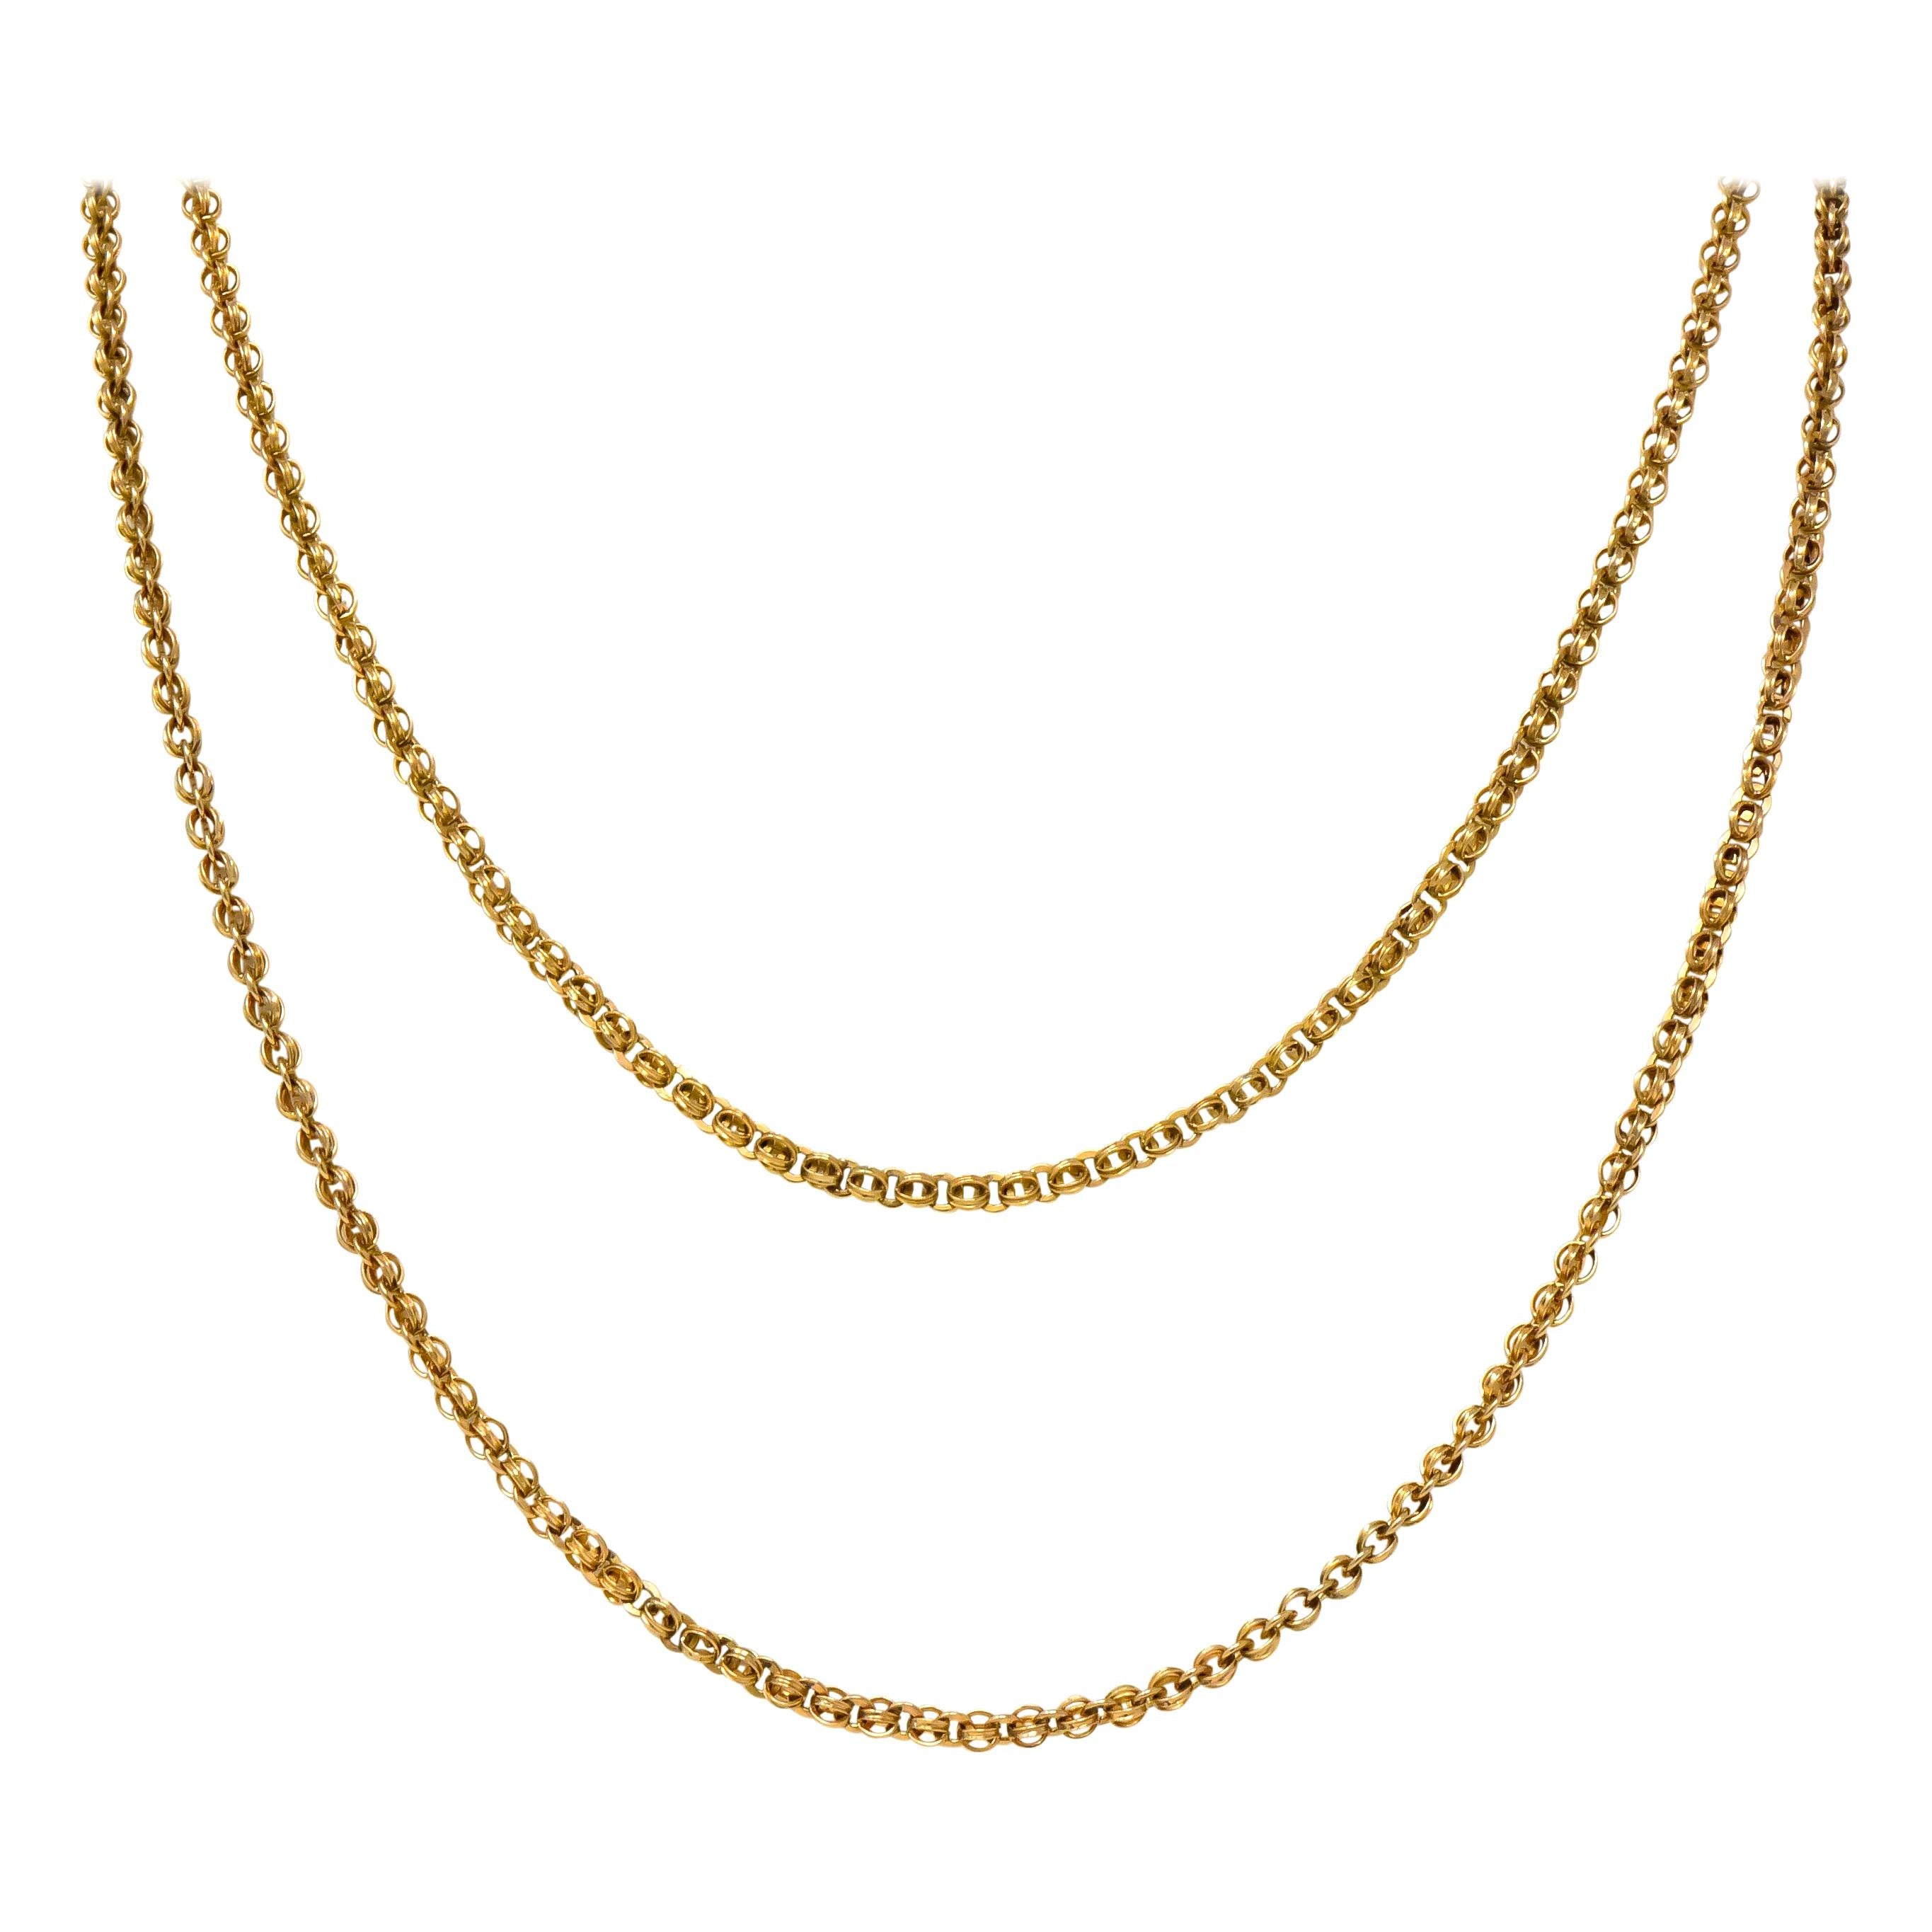 Victorian 14 Karat Gold Fancy Long Chain Necklace